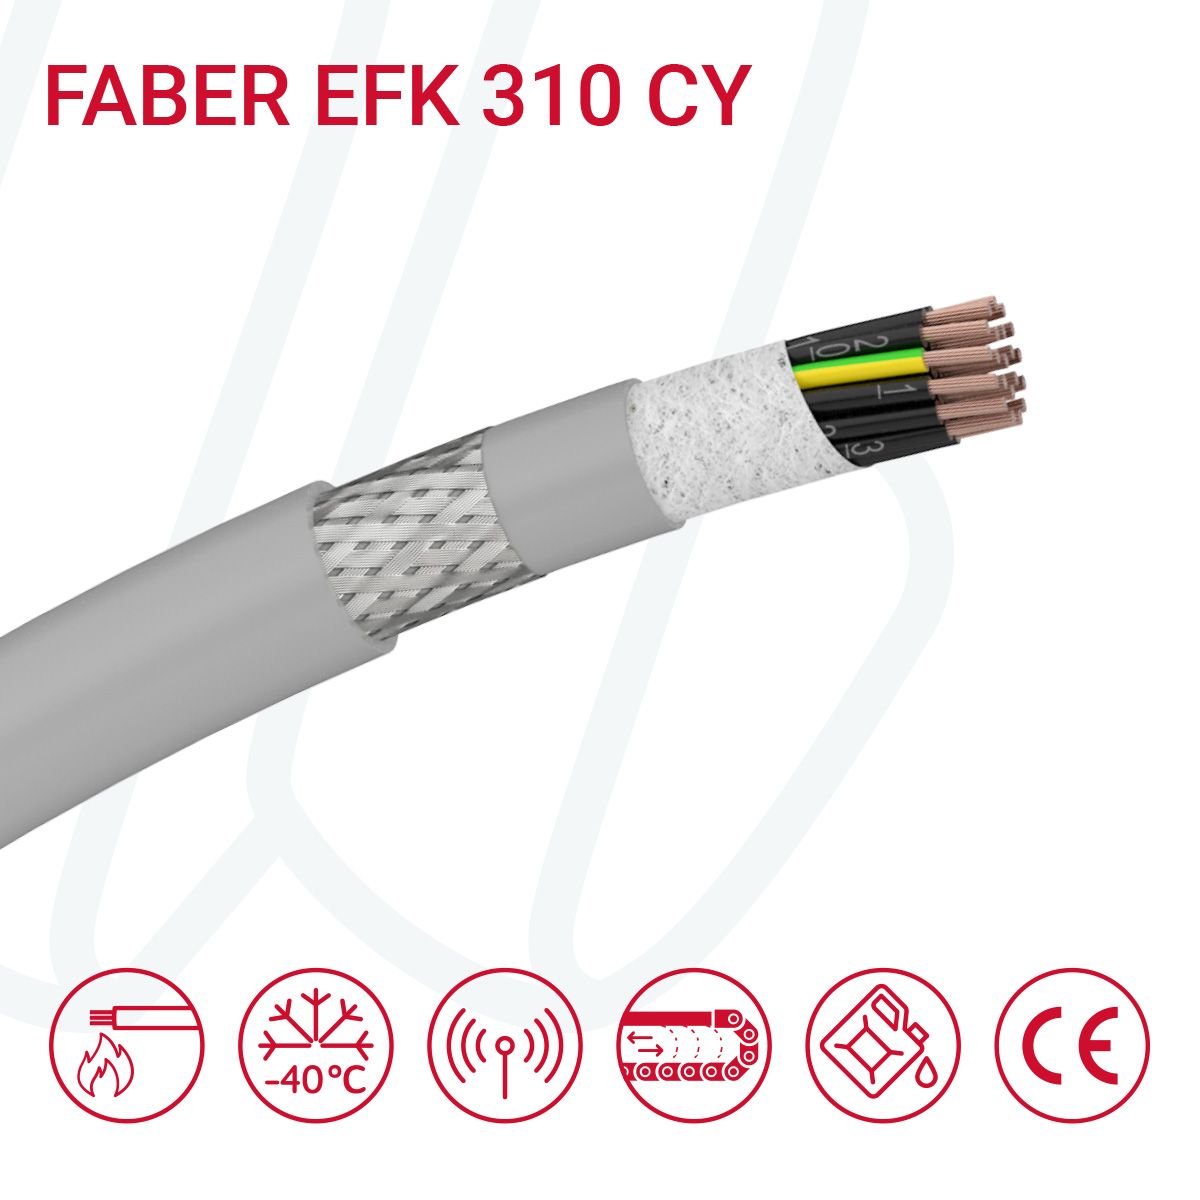 Кабель FABER EFK 310 CY 05G1 cUL сірий, 05, 1.0